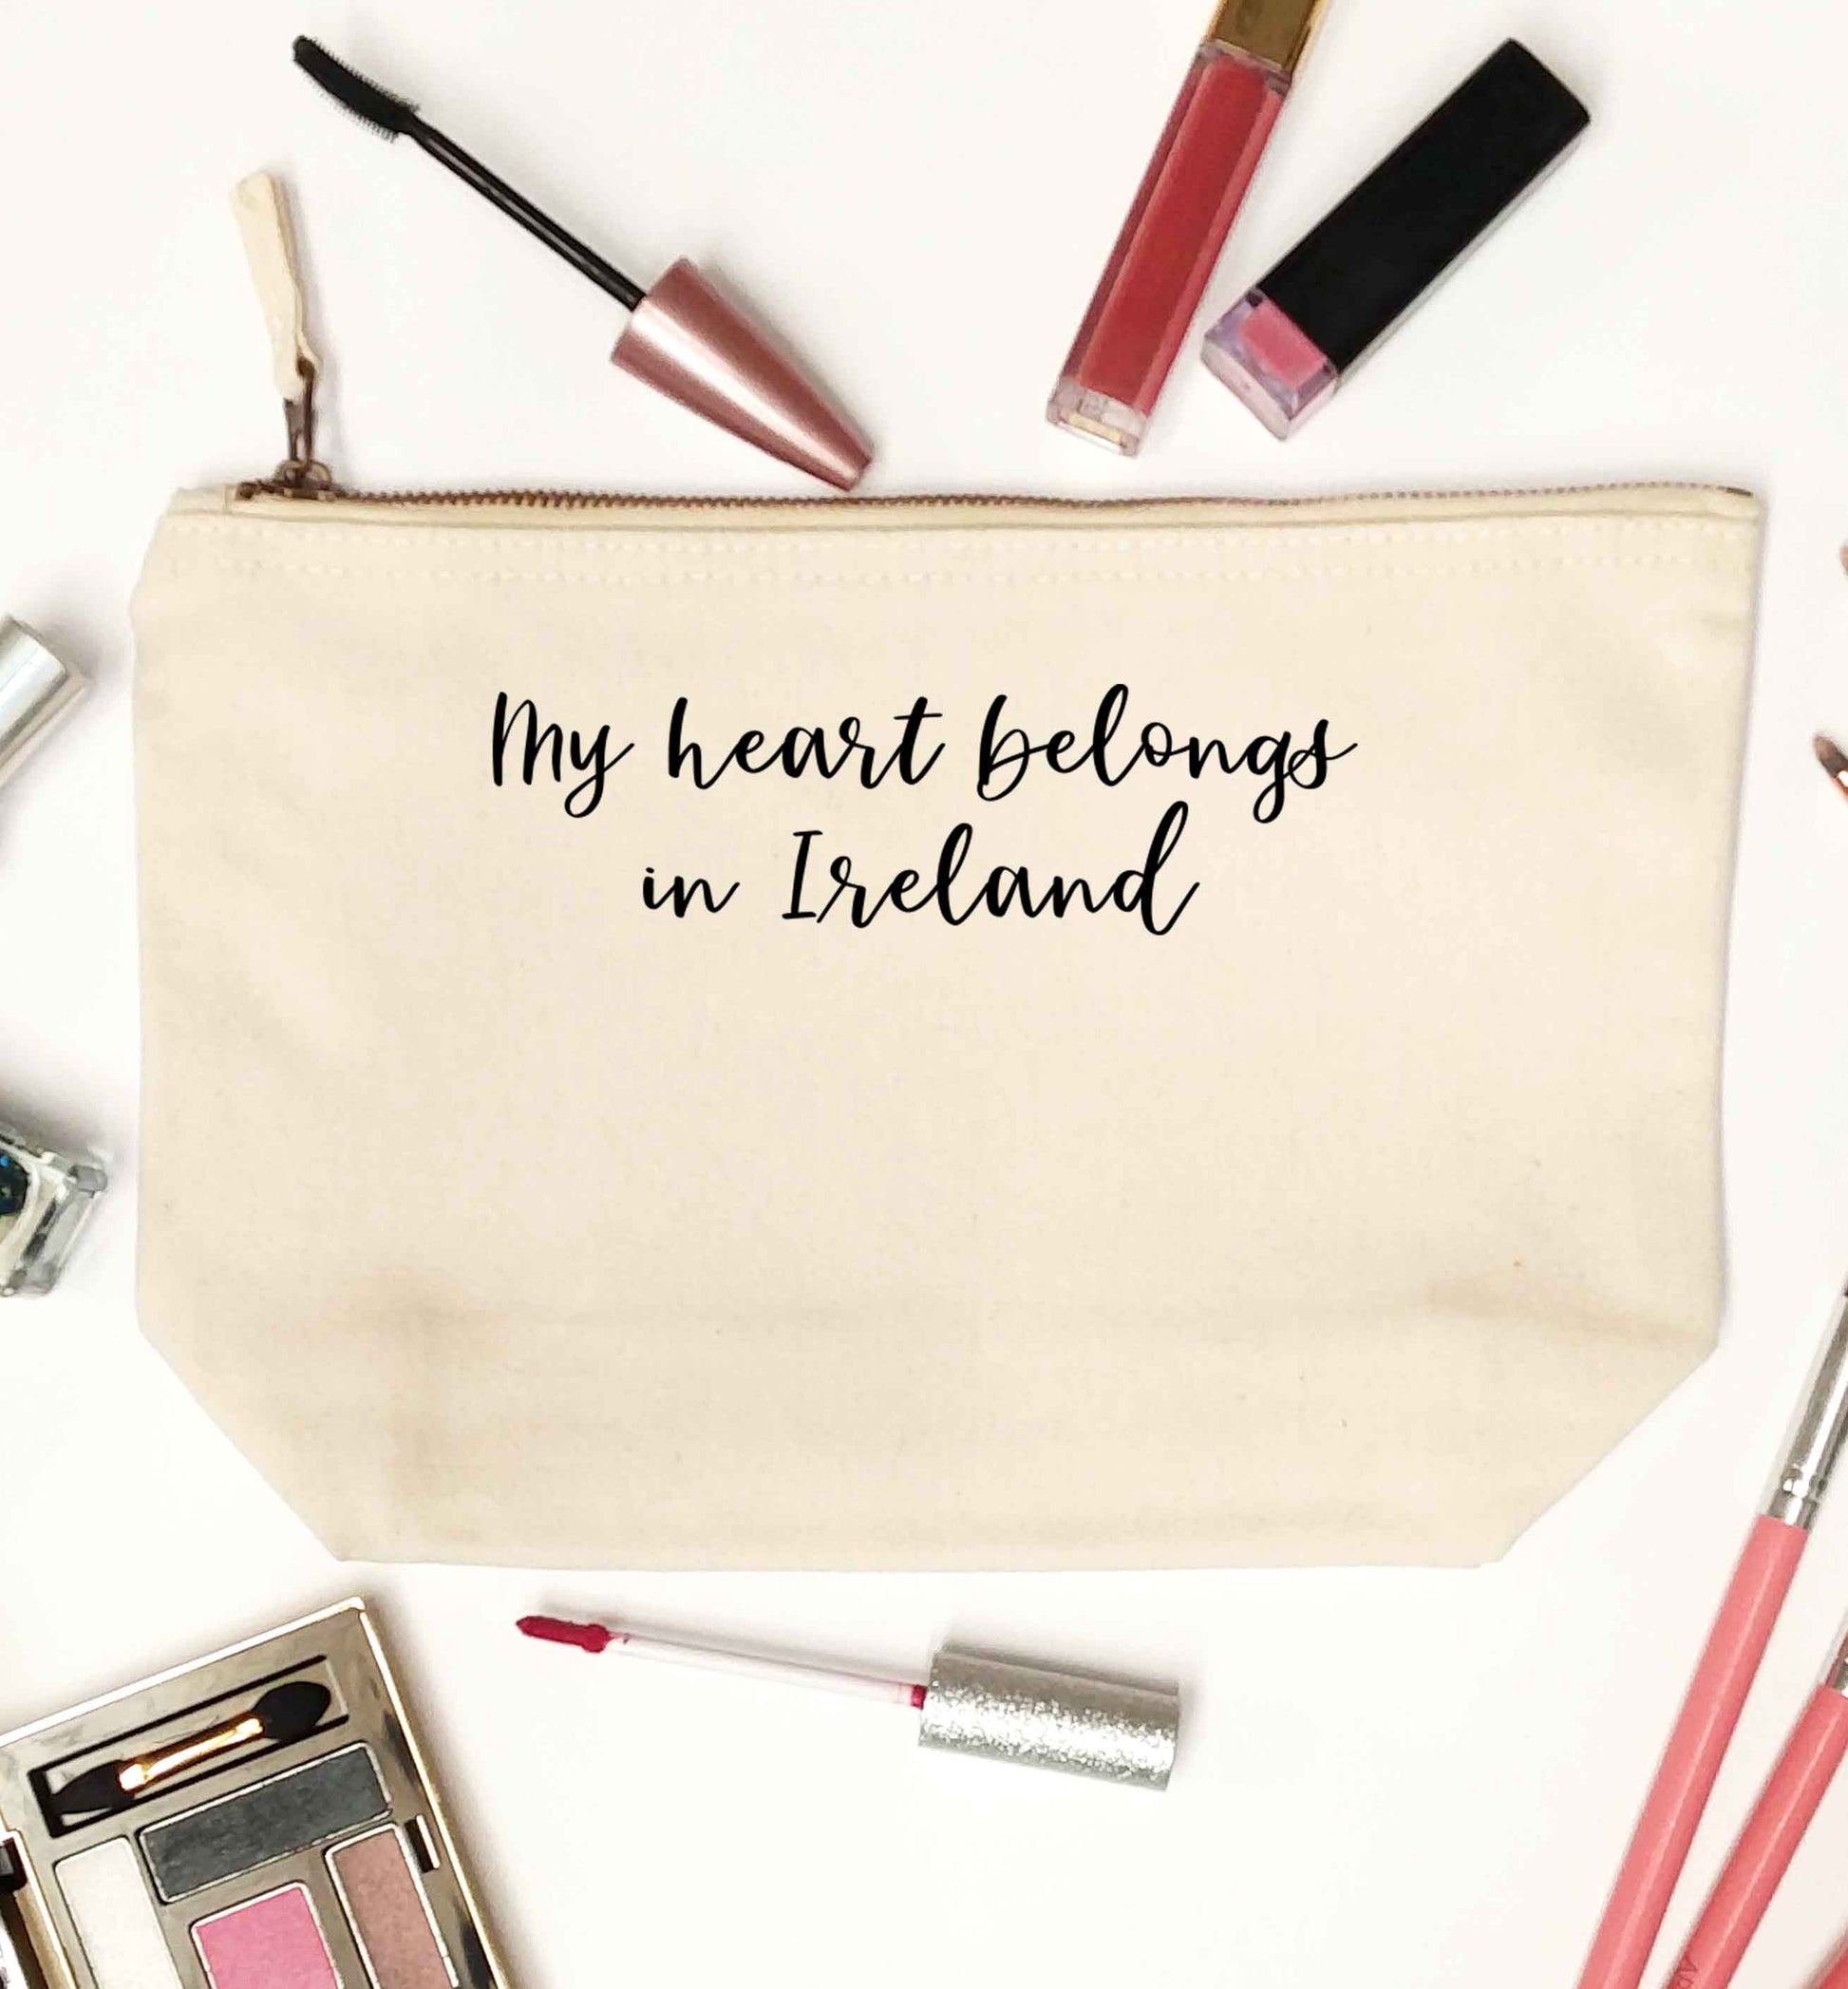 My heart belongs in Ireland natural makeup bag